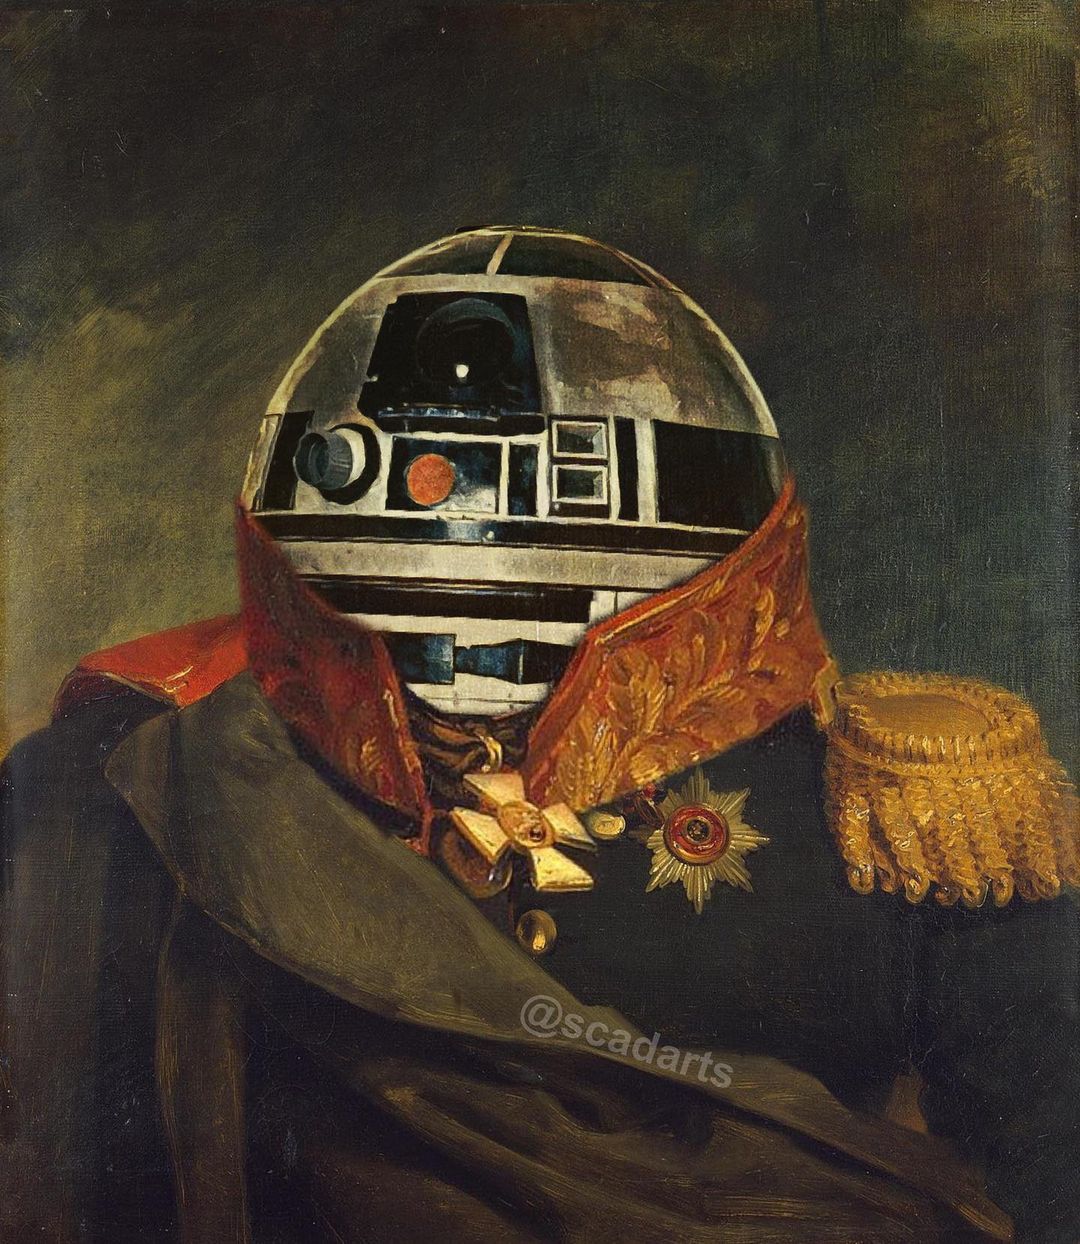 Star Wars Renaissance Portraits